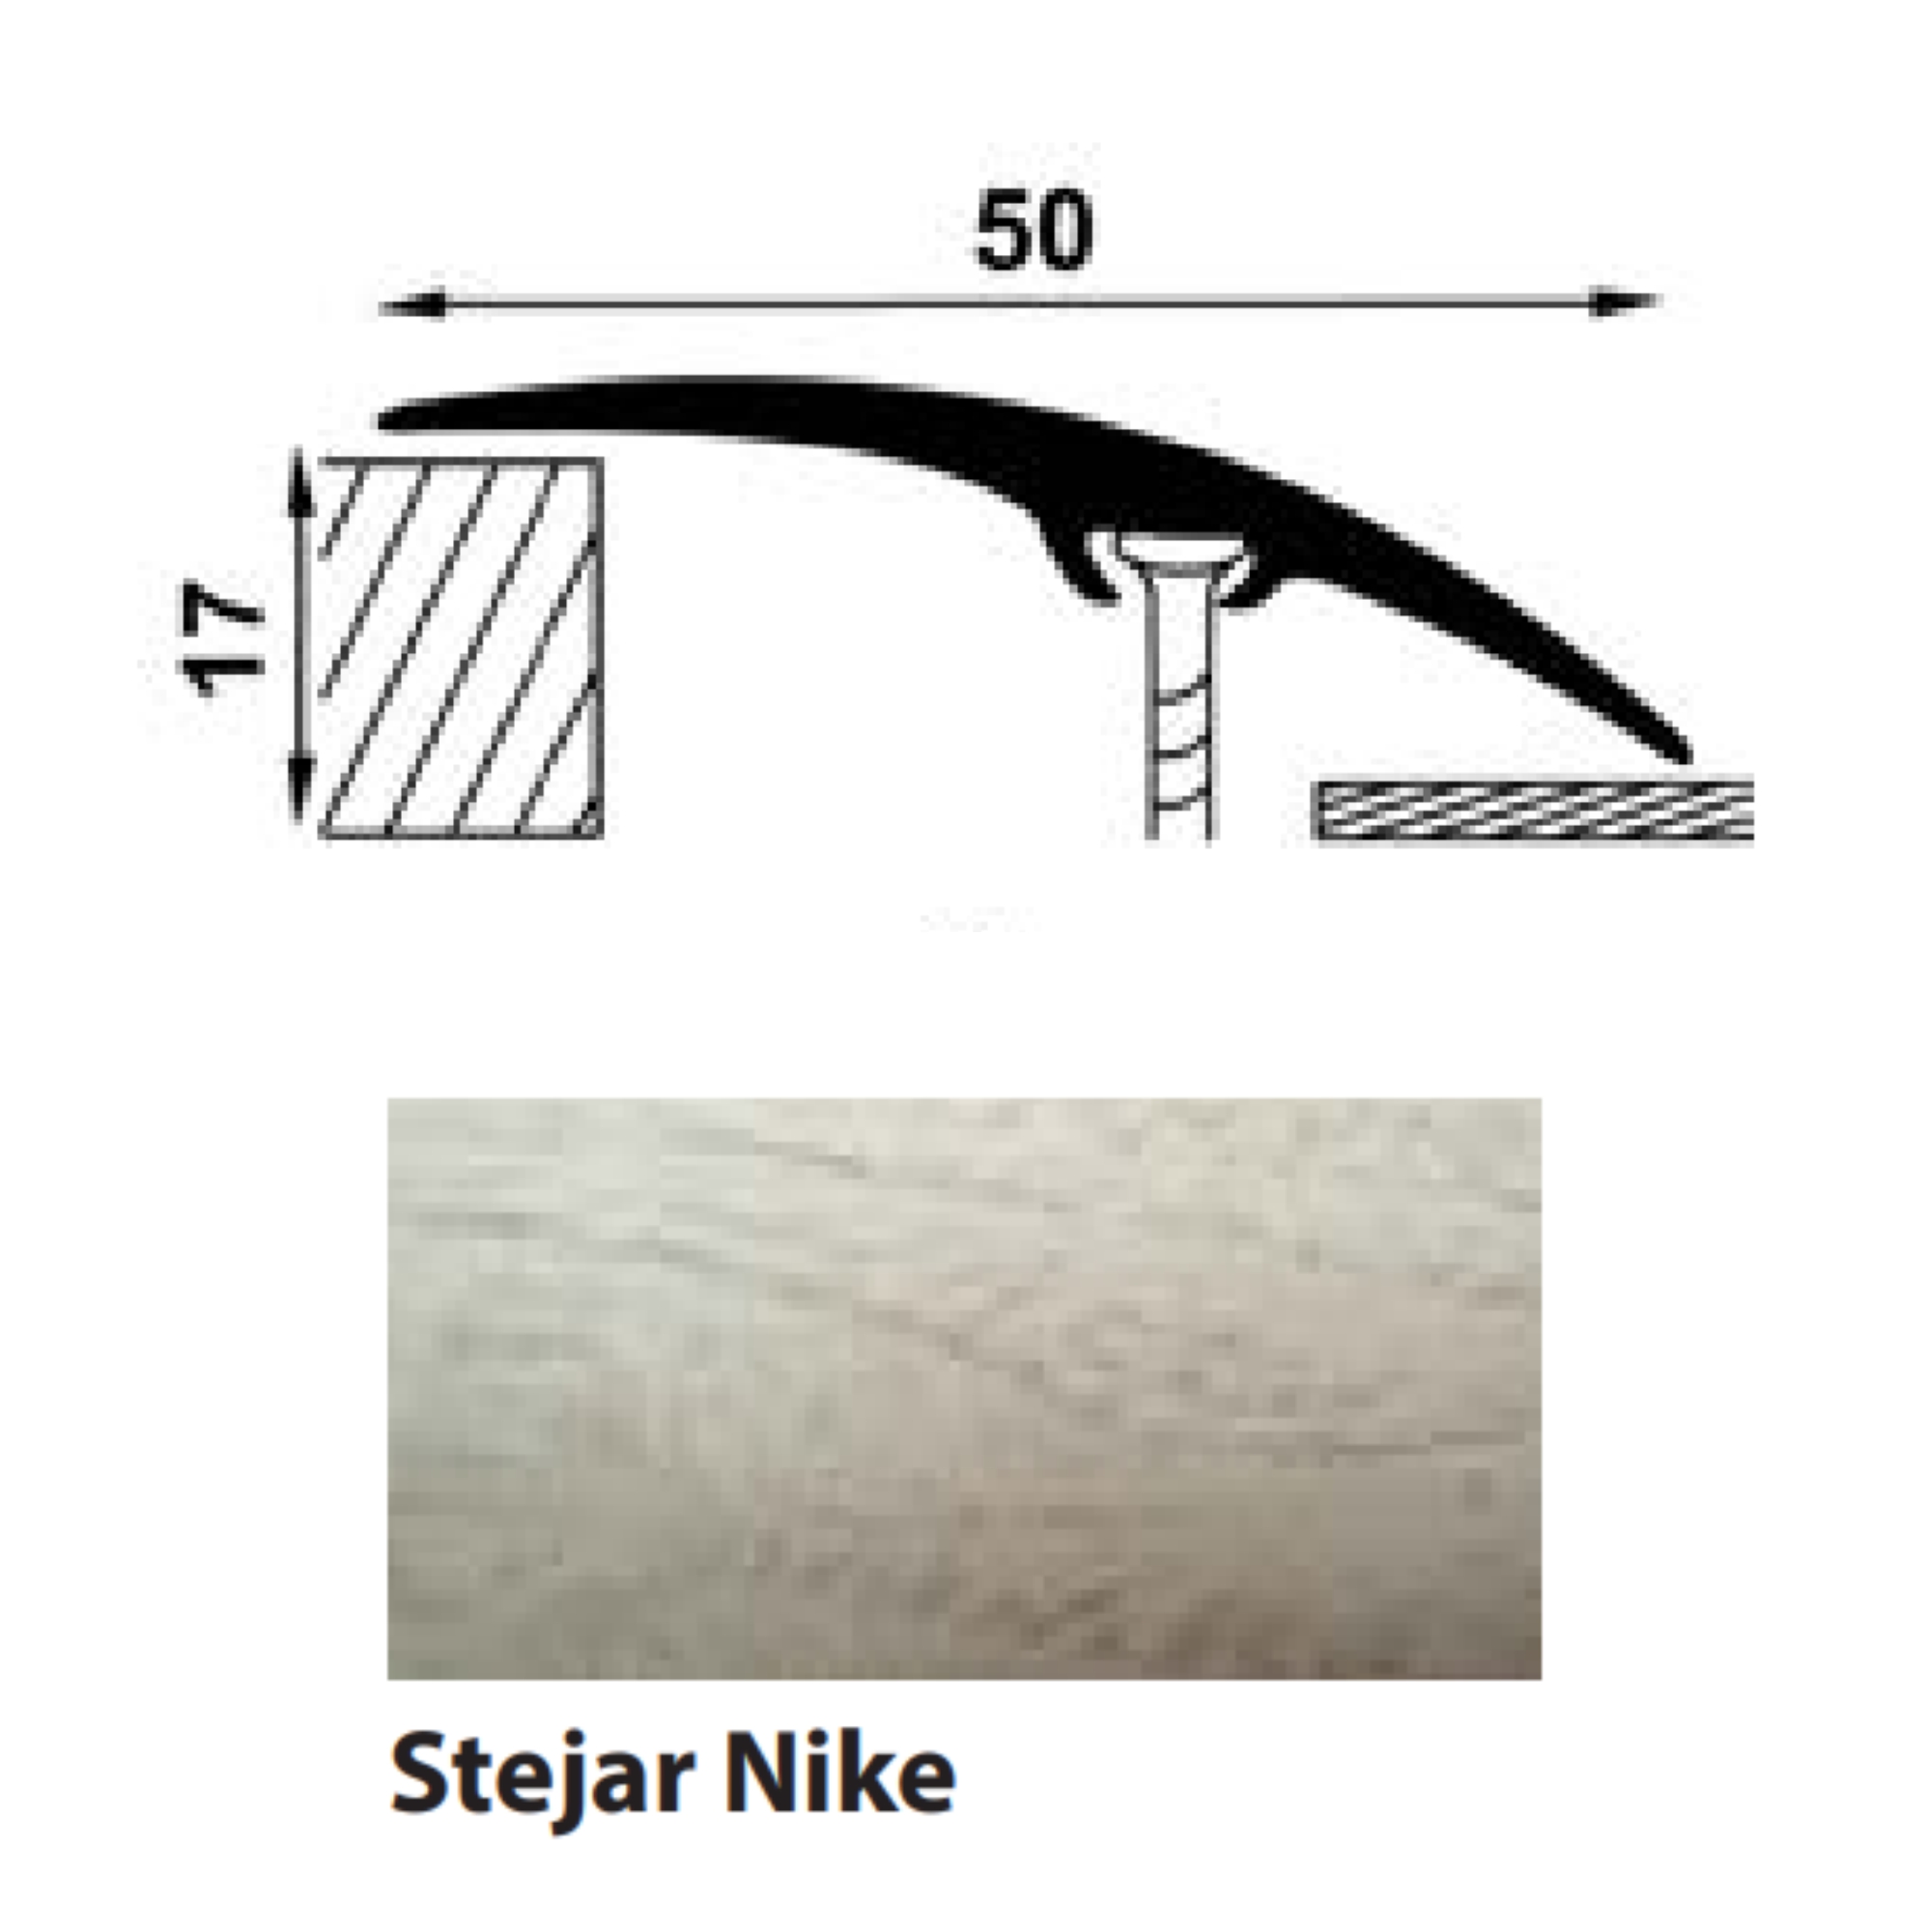 Profile de trecere - Profil aluminiu de trecere, cu surub ascuns, PM75607, stejar nike, 900 x 50 mm, profiline.ro